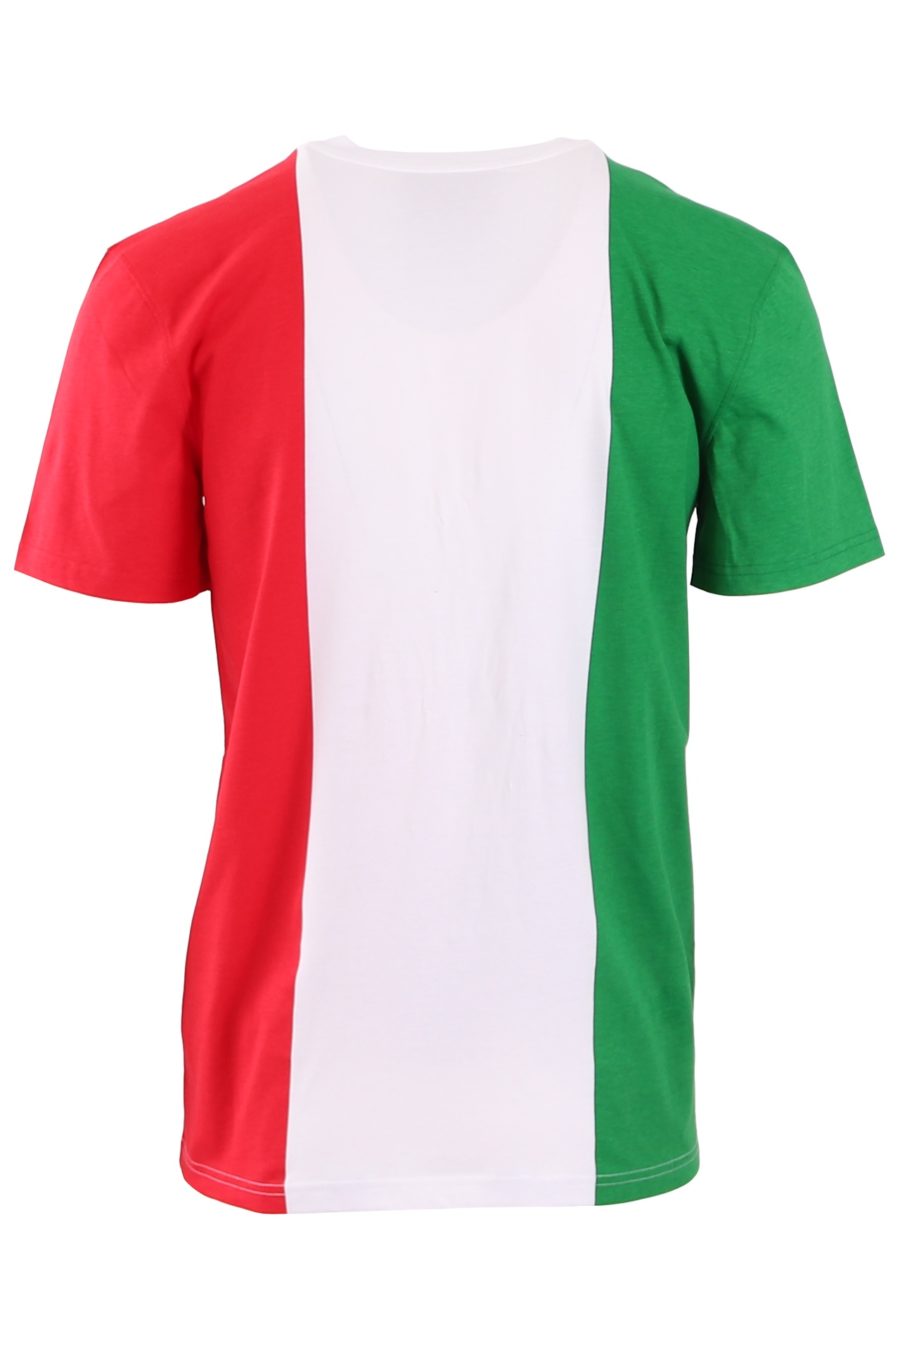 Camiseta Moschino Couture colores de Italia - 28bf4902a8e636c090fd48e2a05625ea90cbb34b